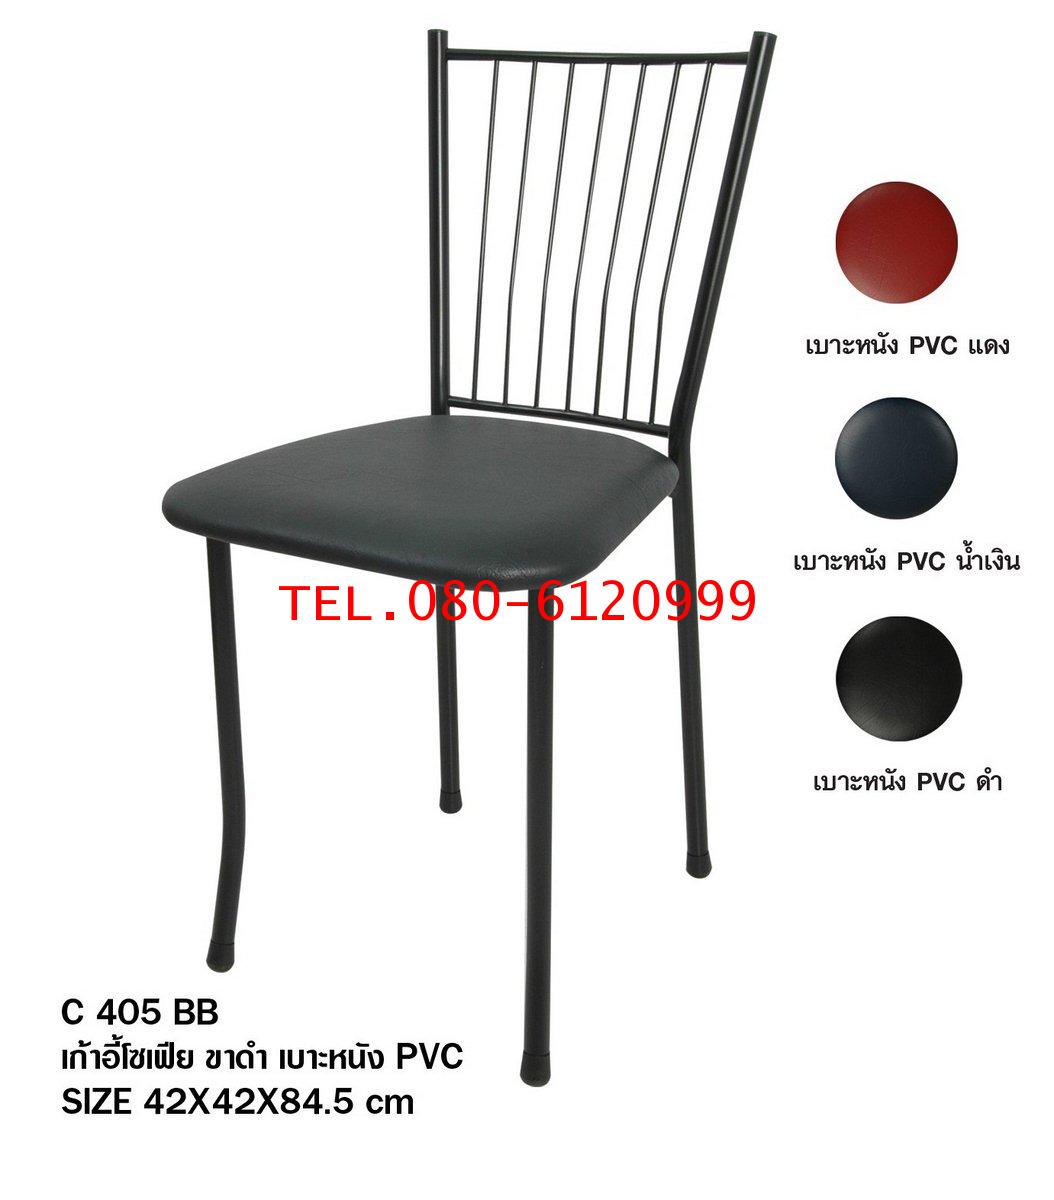 pmy29-17 เก้าอี้โซเฟีย ขาดำ เบาะหนัง PVC